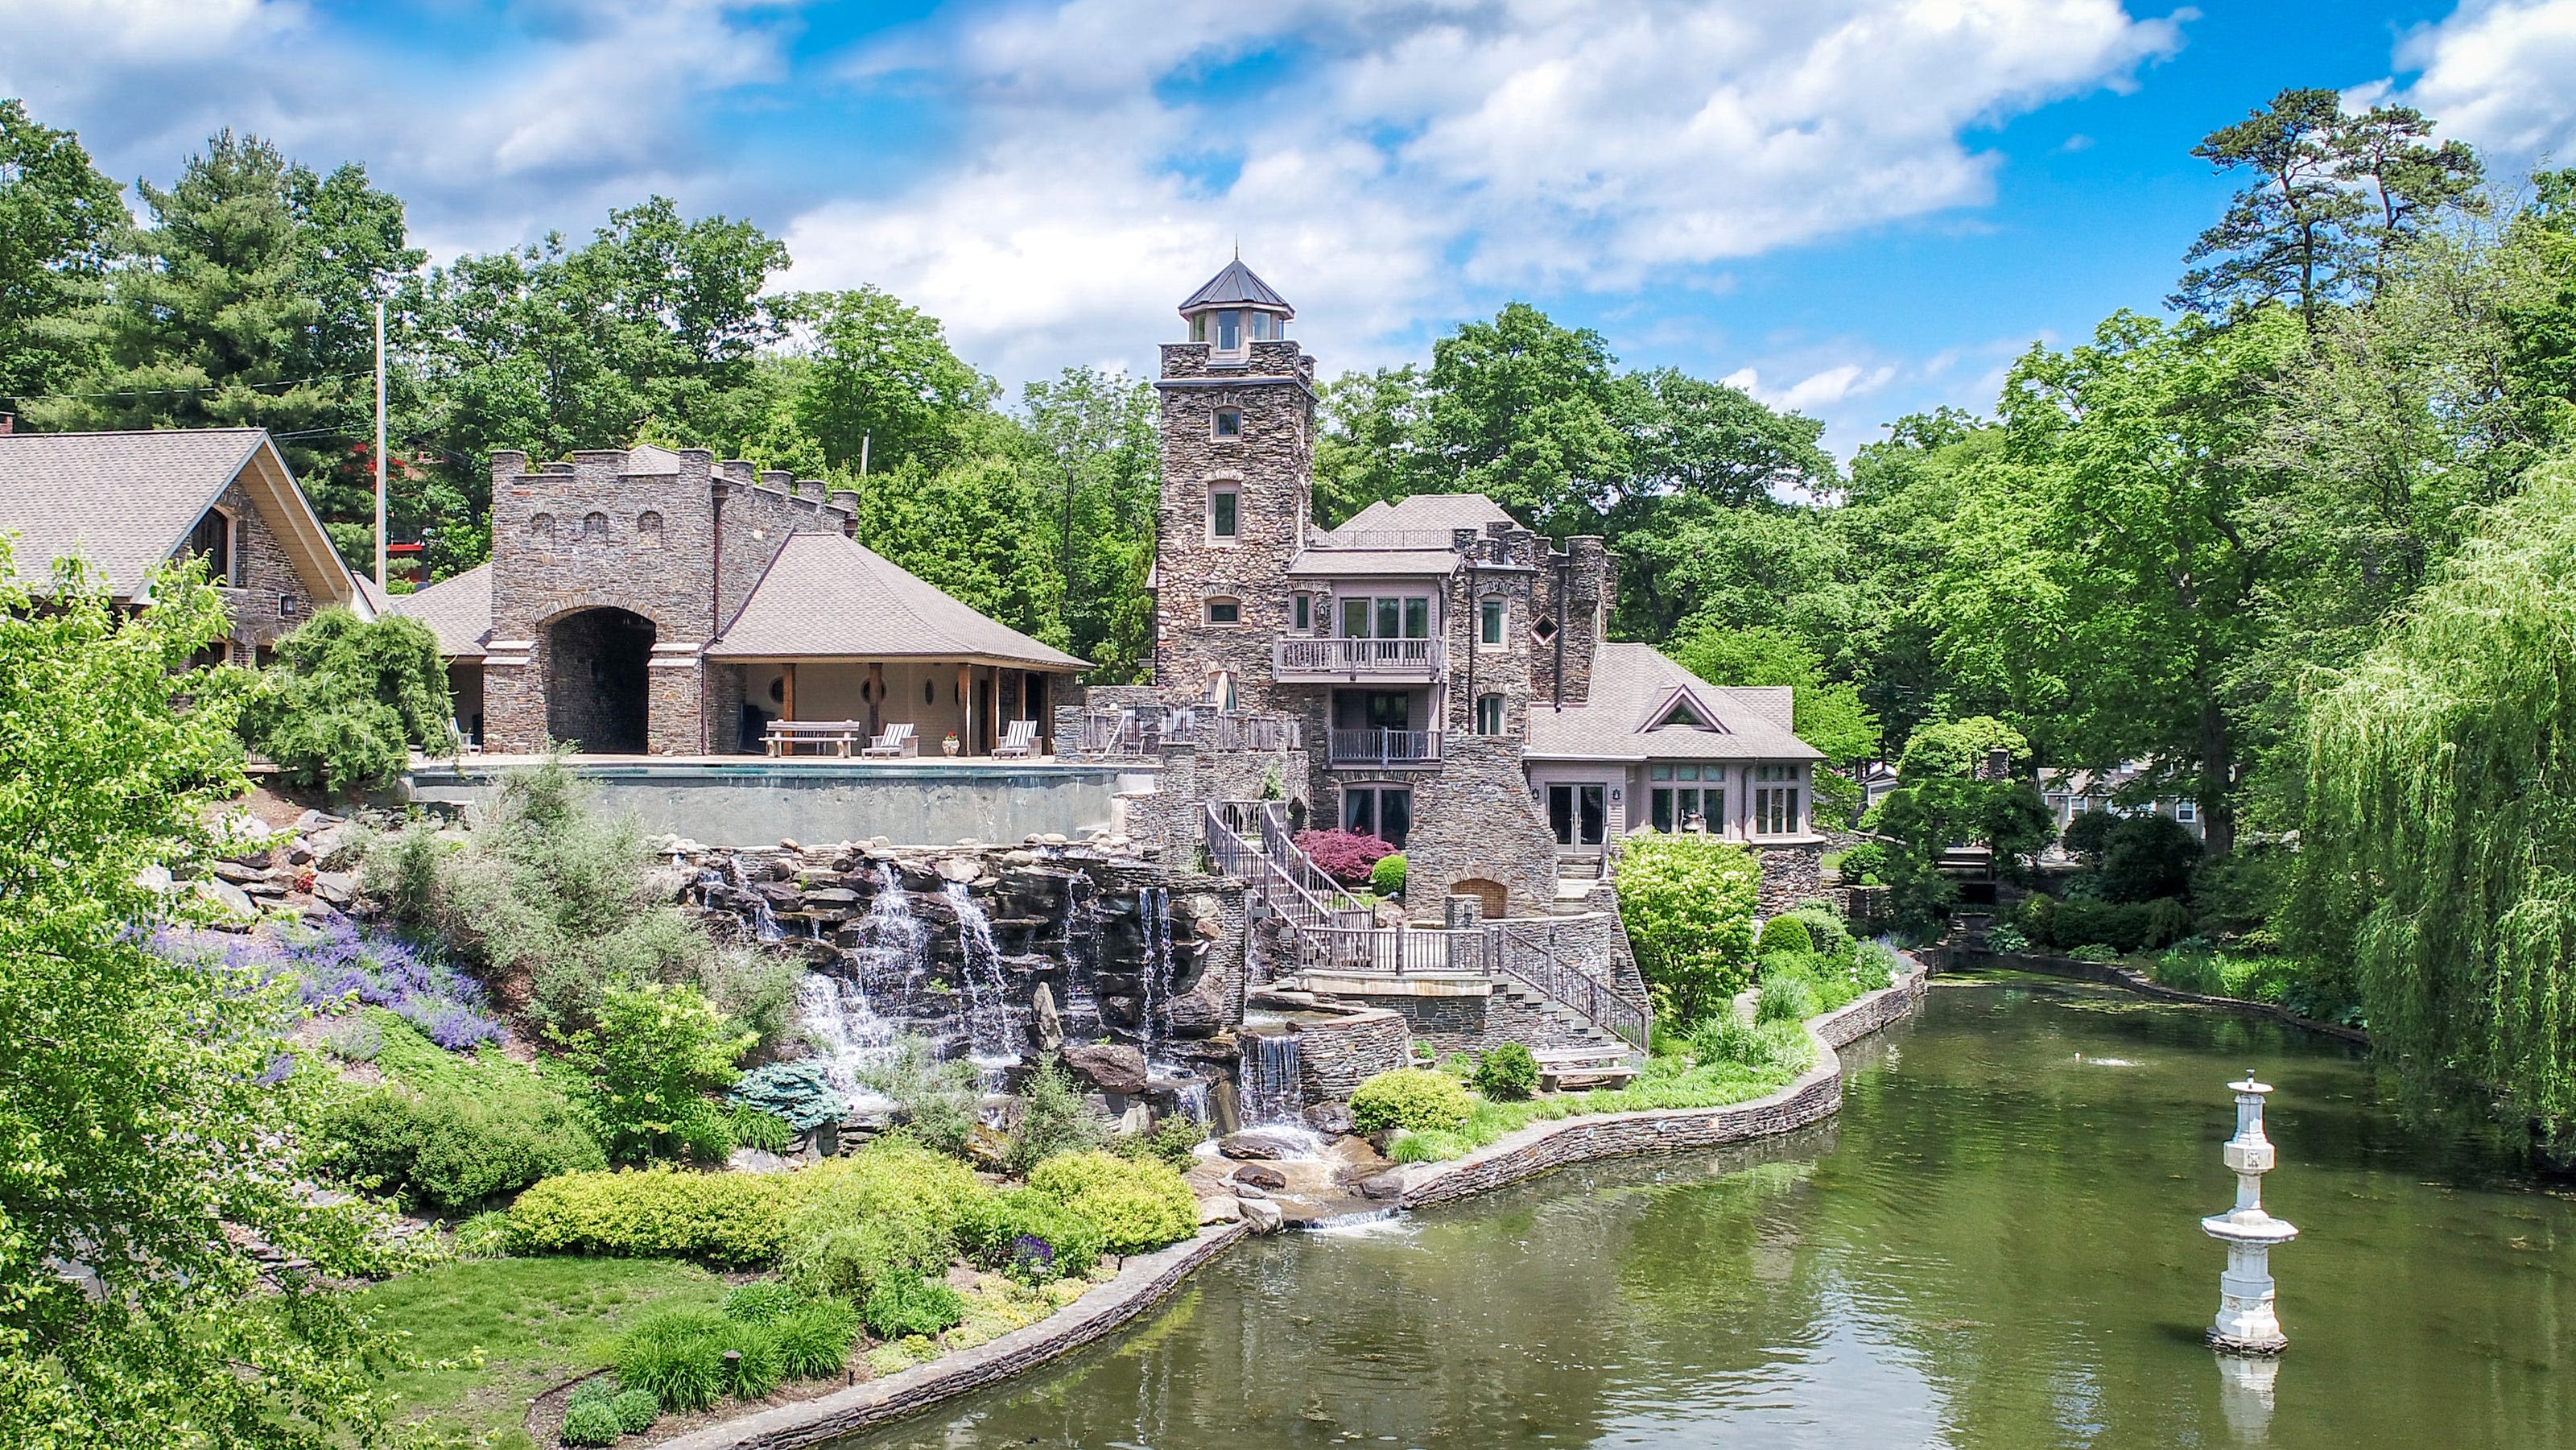 Derek Jeter's Greenwood Lake 'castle' back on the market at drastically reduced price